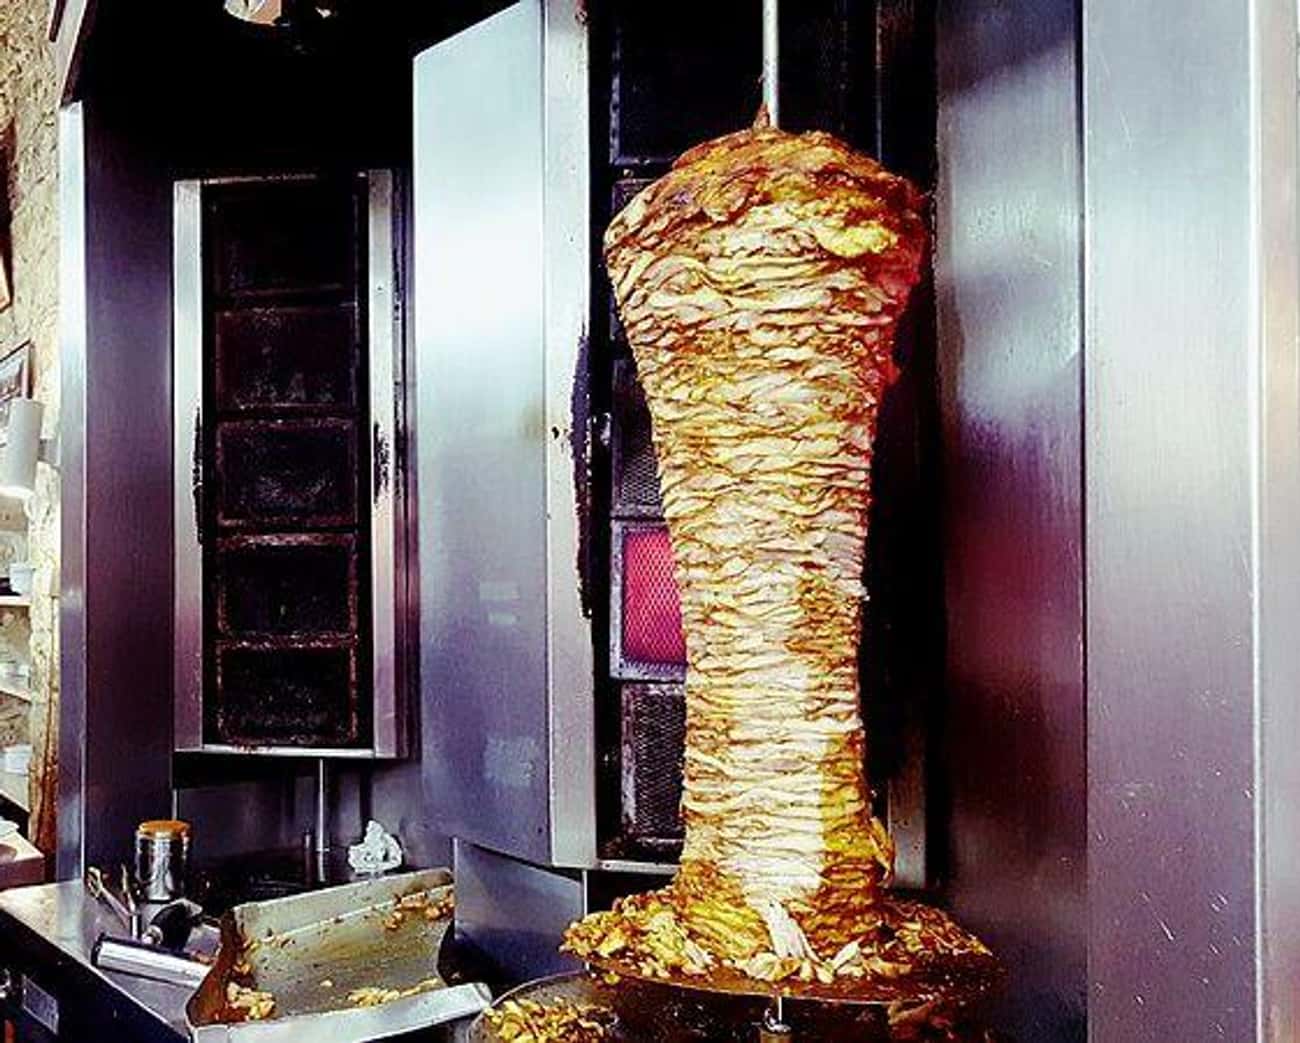 Shawarma - Syria